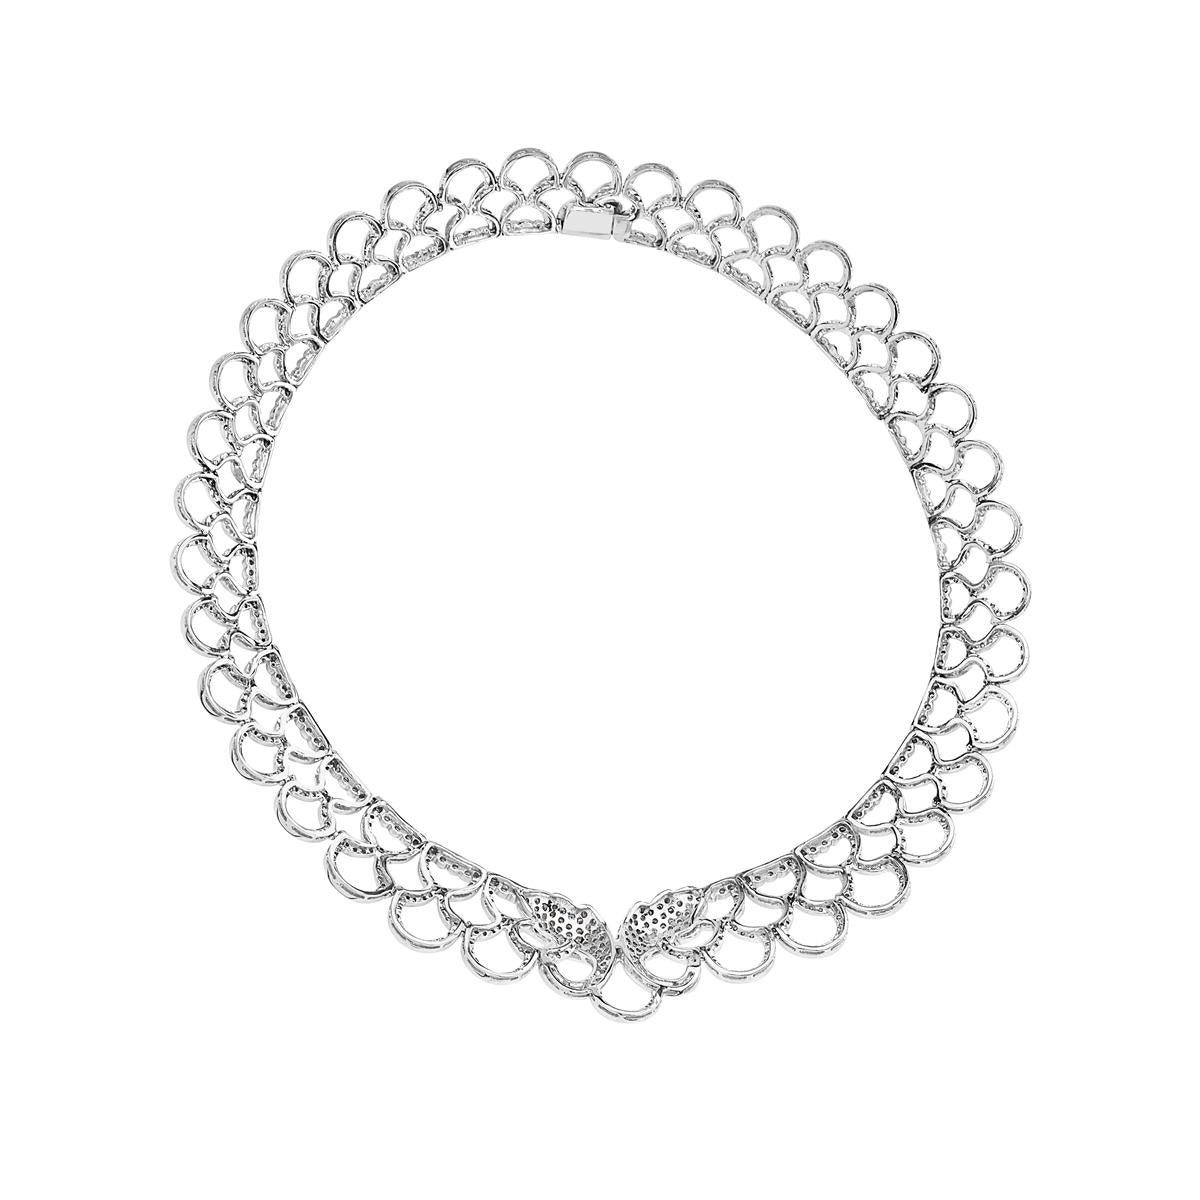 18 carat necklace price